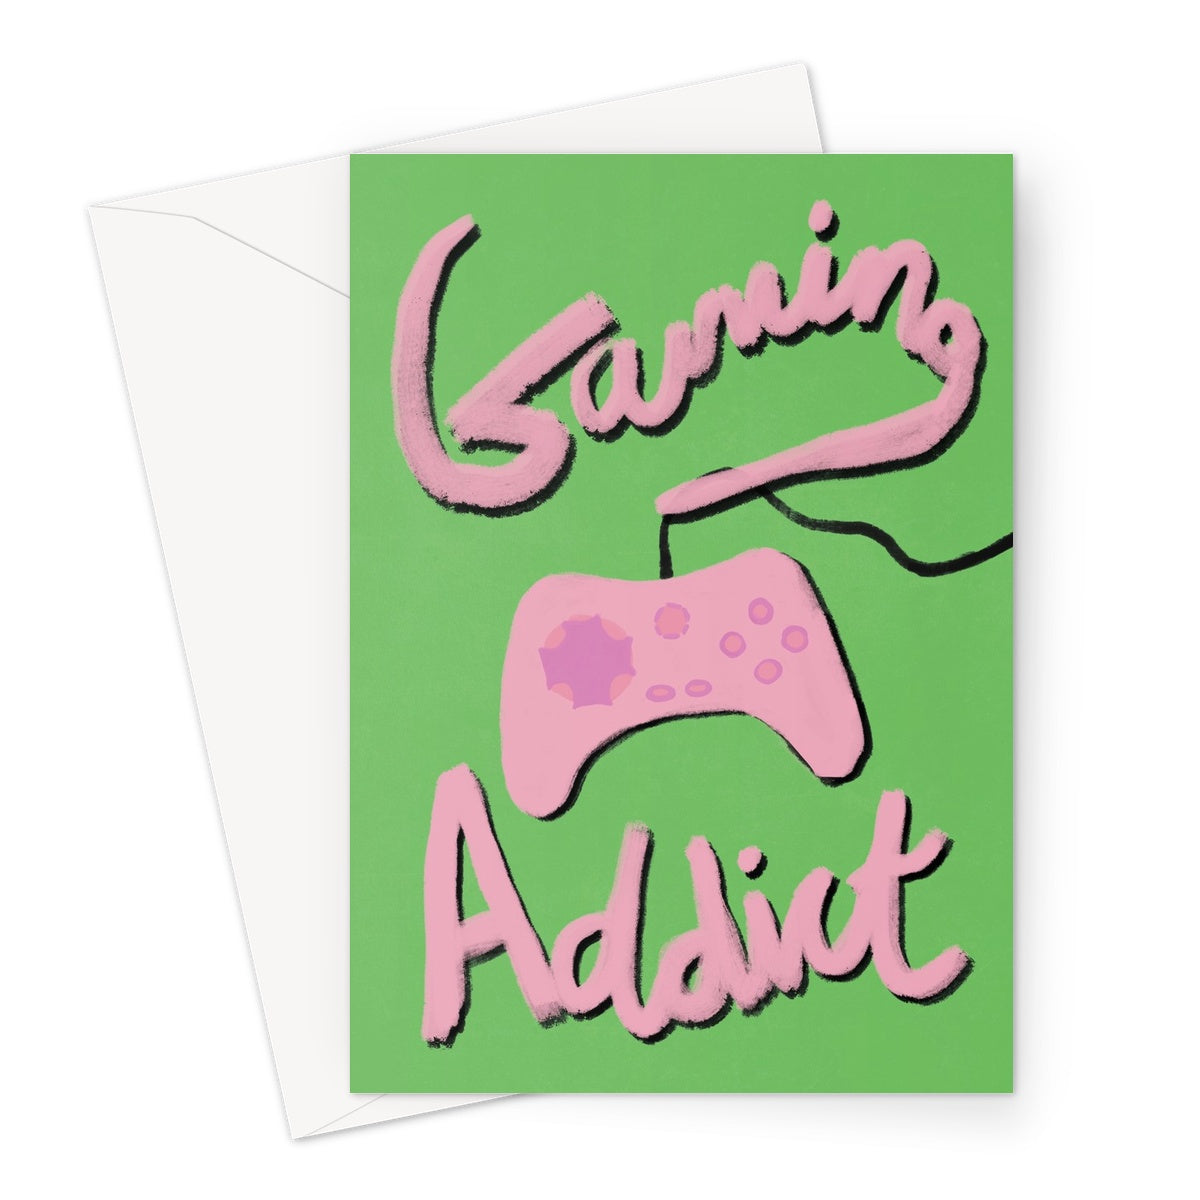 Gaming Addict Print - Green, Pink Greeting Card